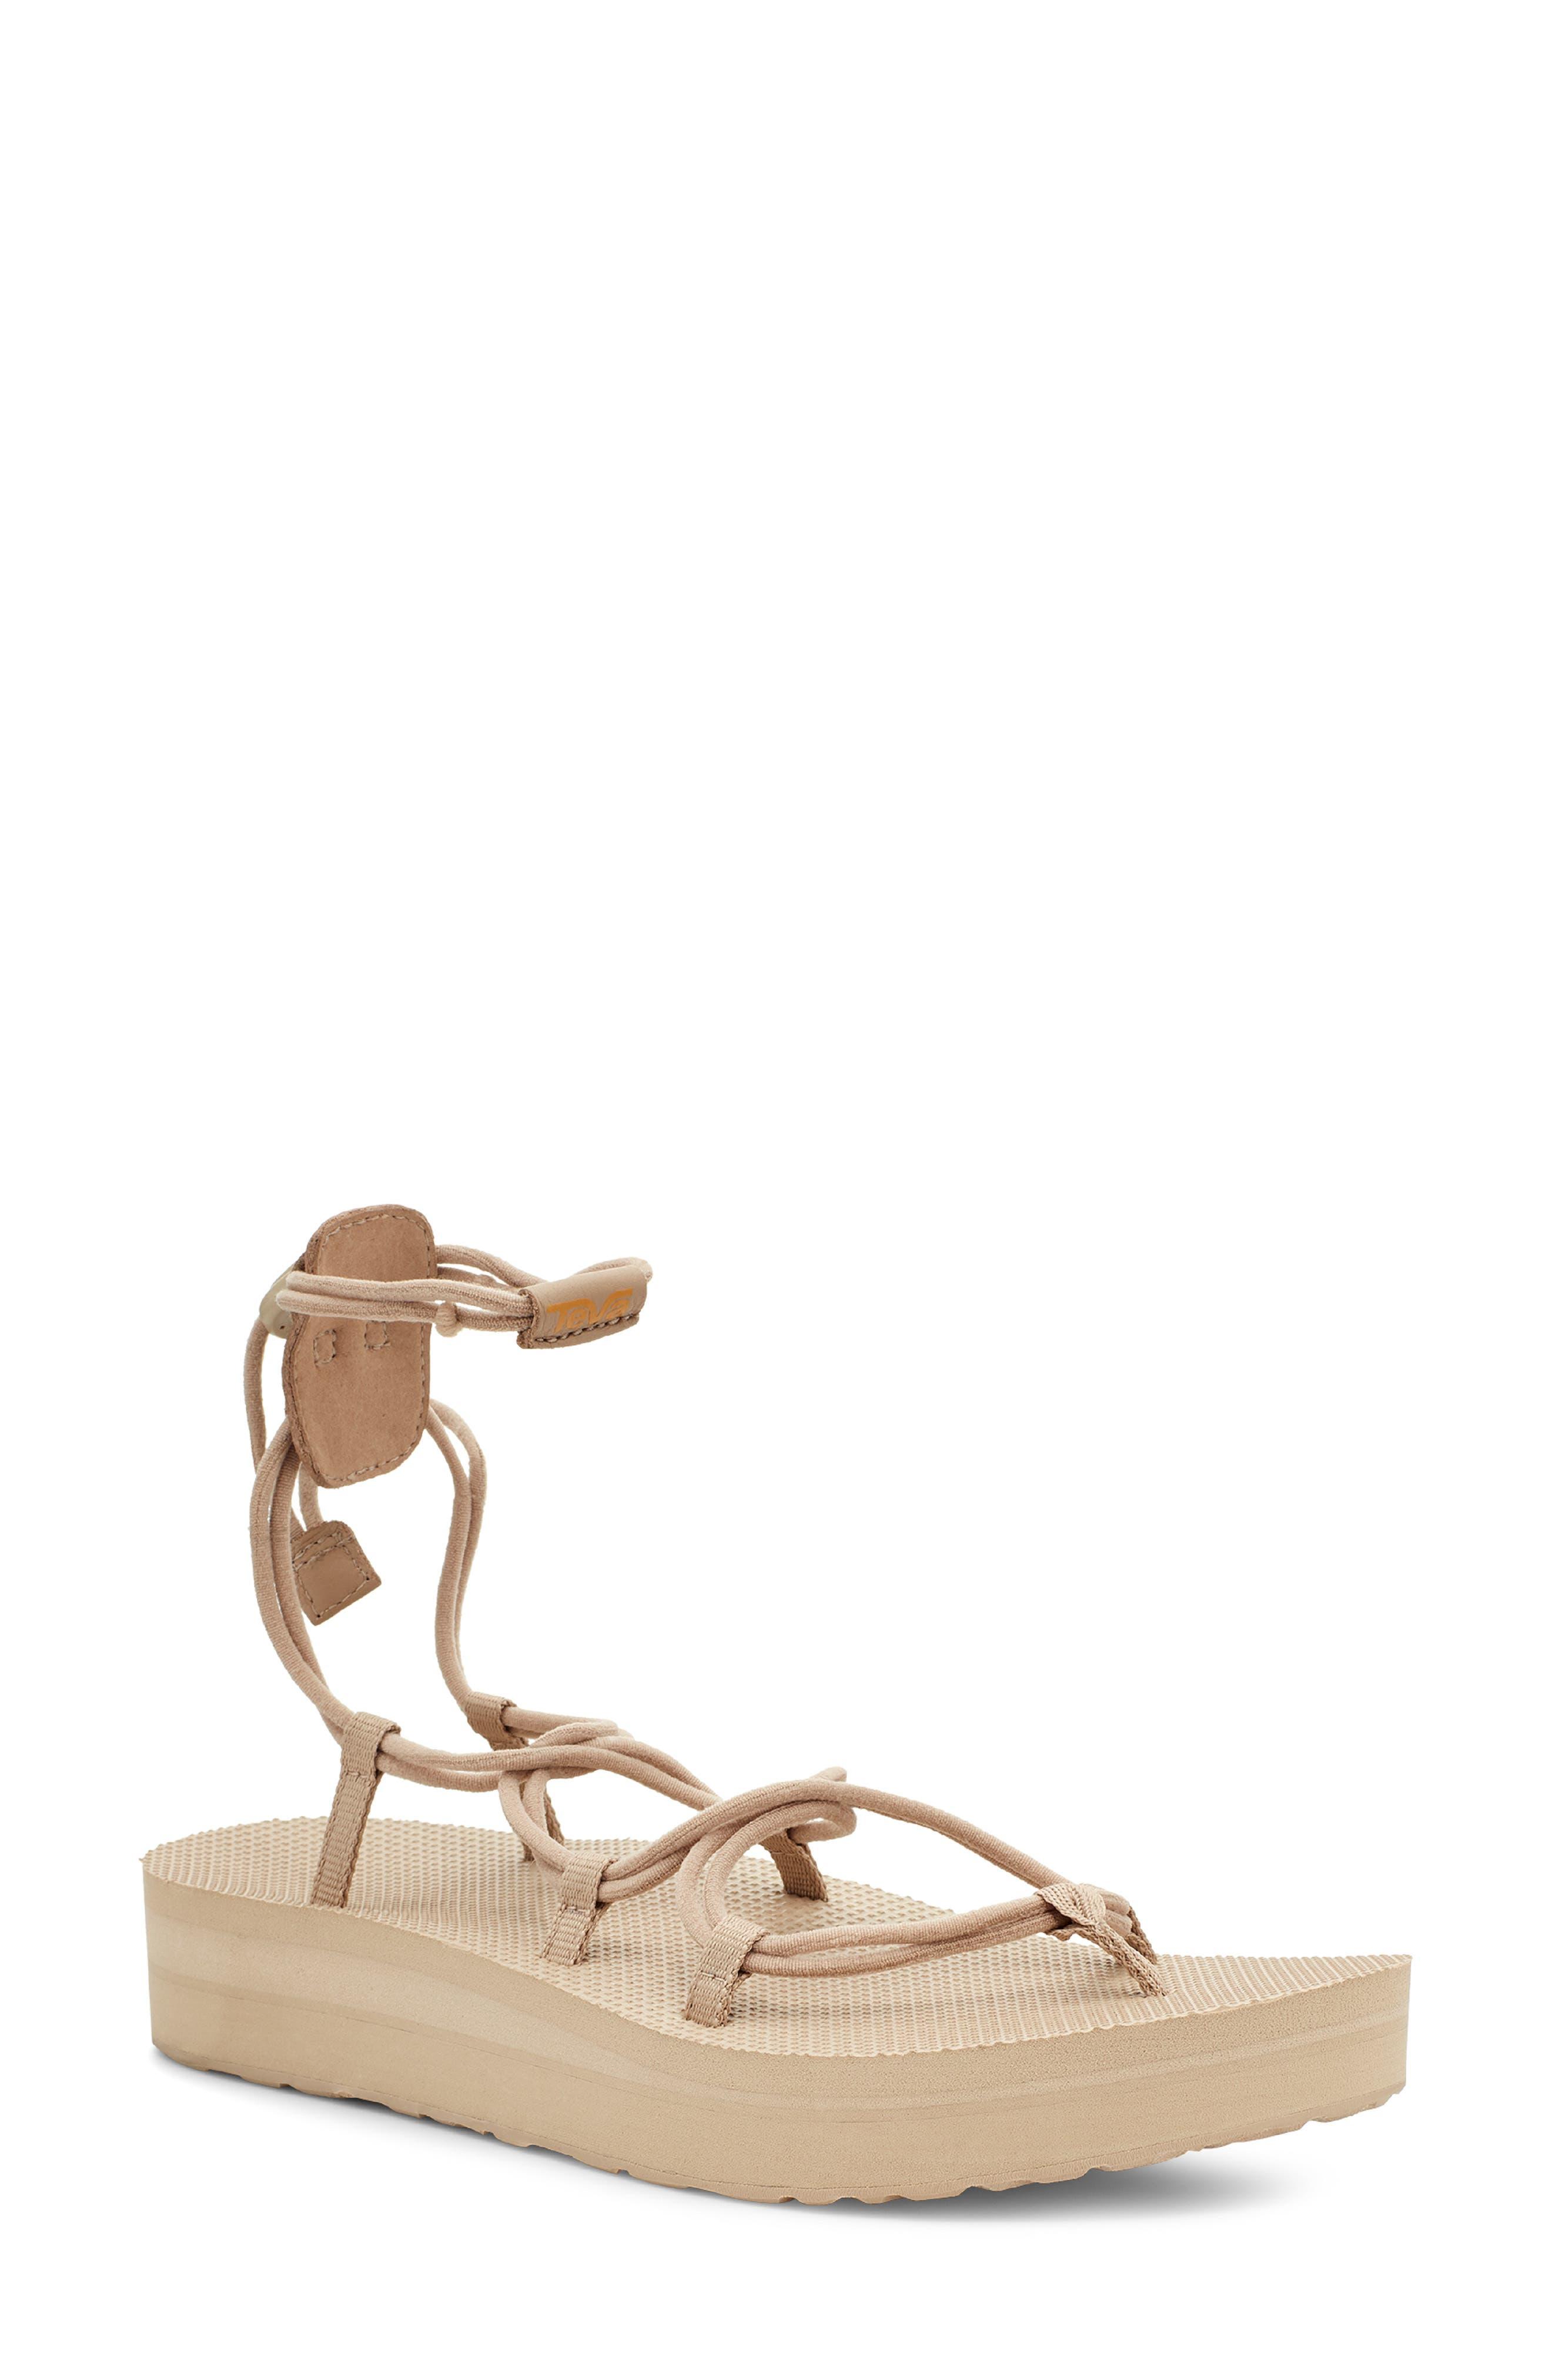 Teva Midform Infinity Gladiator Sandal in Natural | Lyst